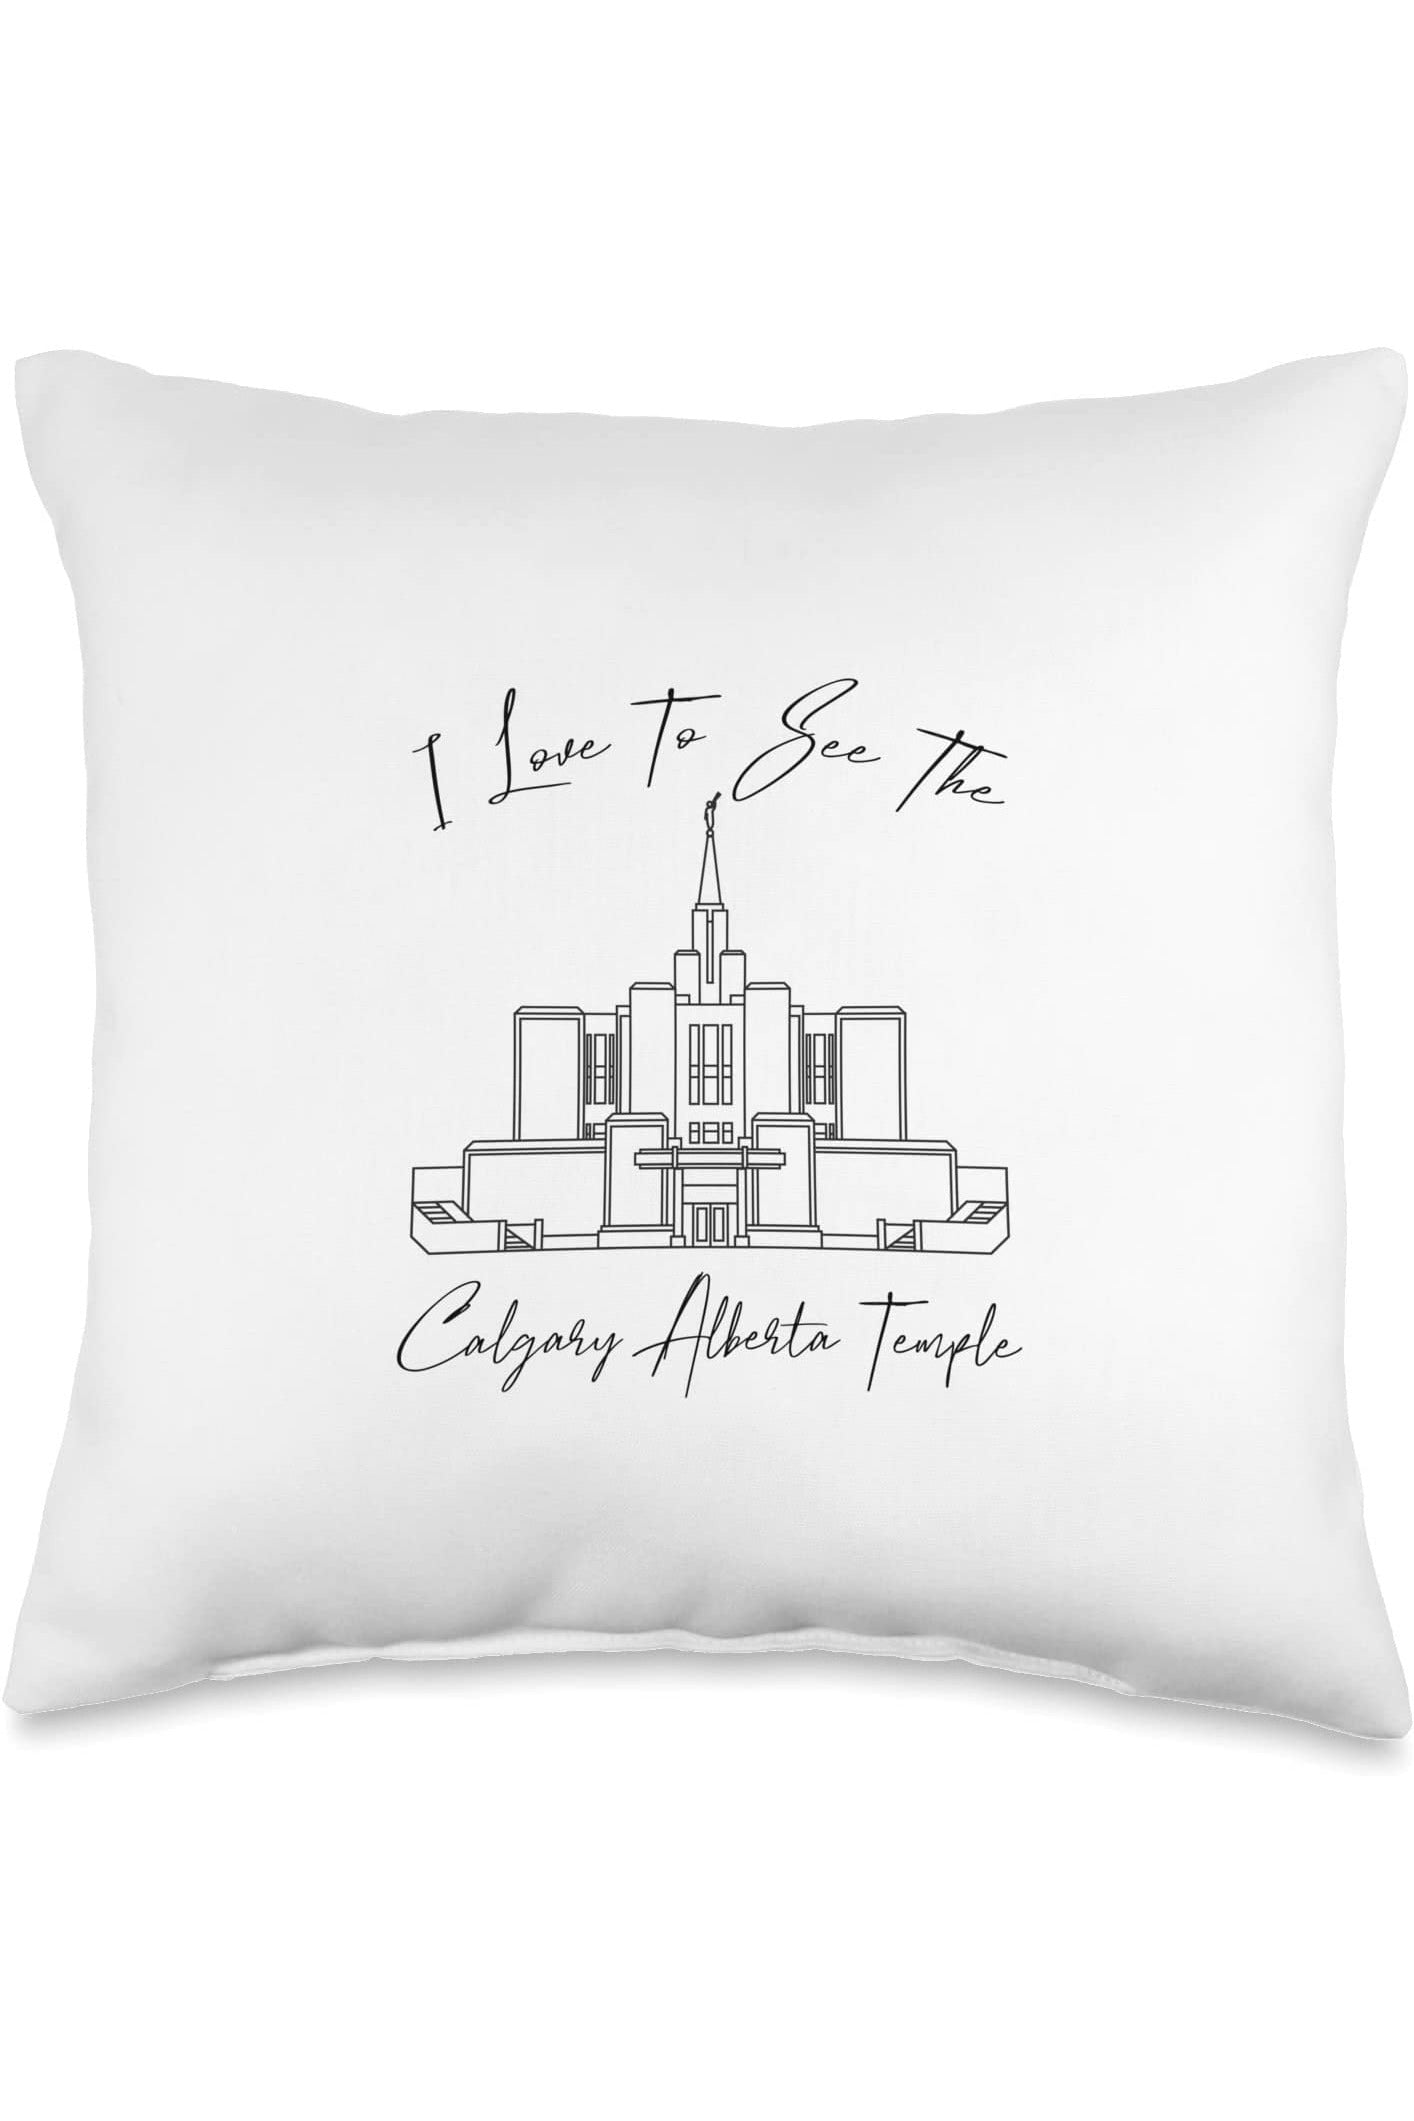 Calgary Alberta Temple Throw Pillows - Calligraphy Style (English) US